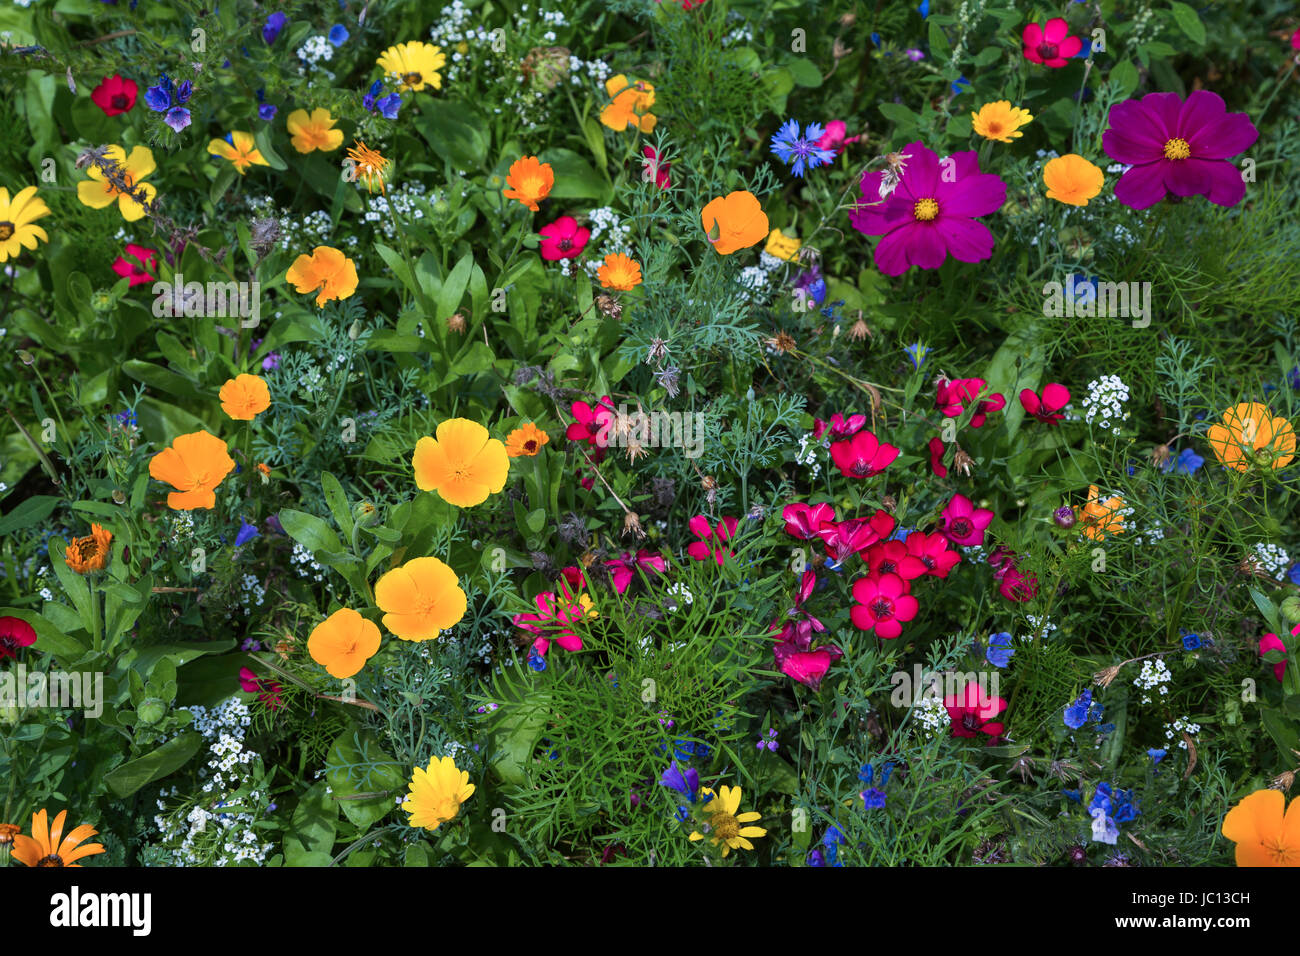 Farbenfrohe Blumenwiese Foto Stock